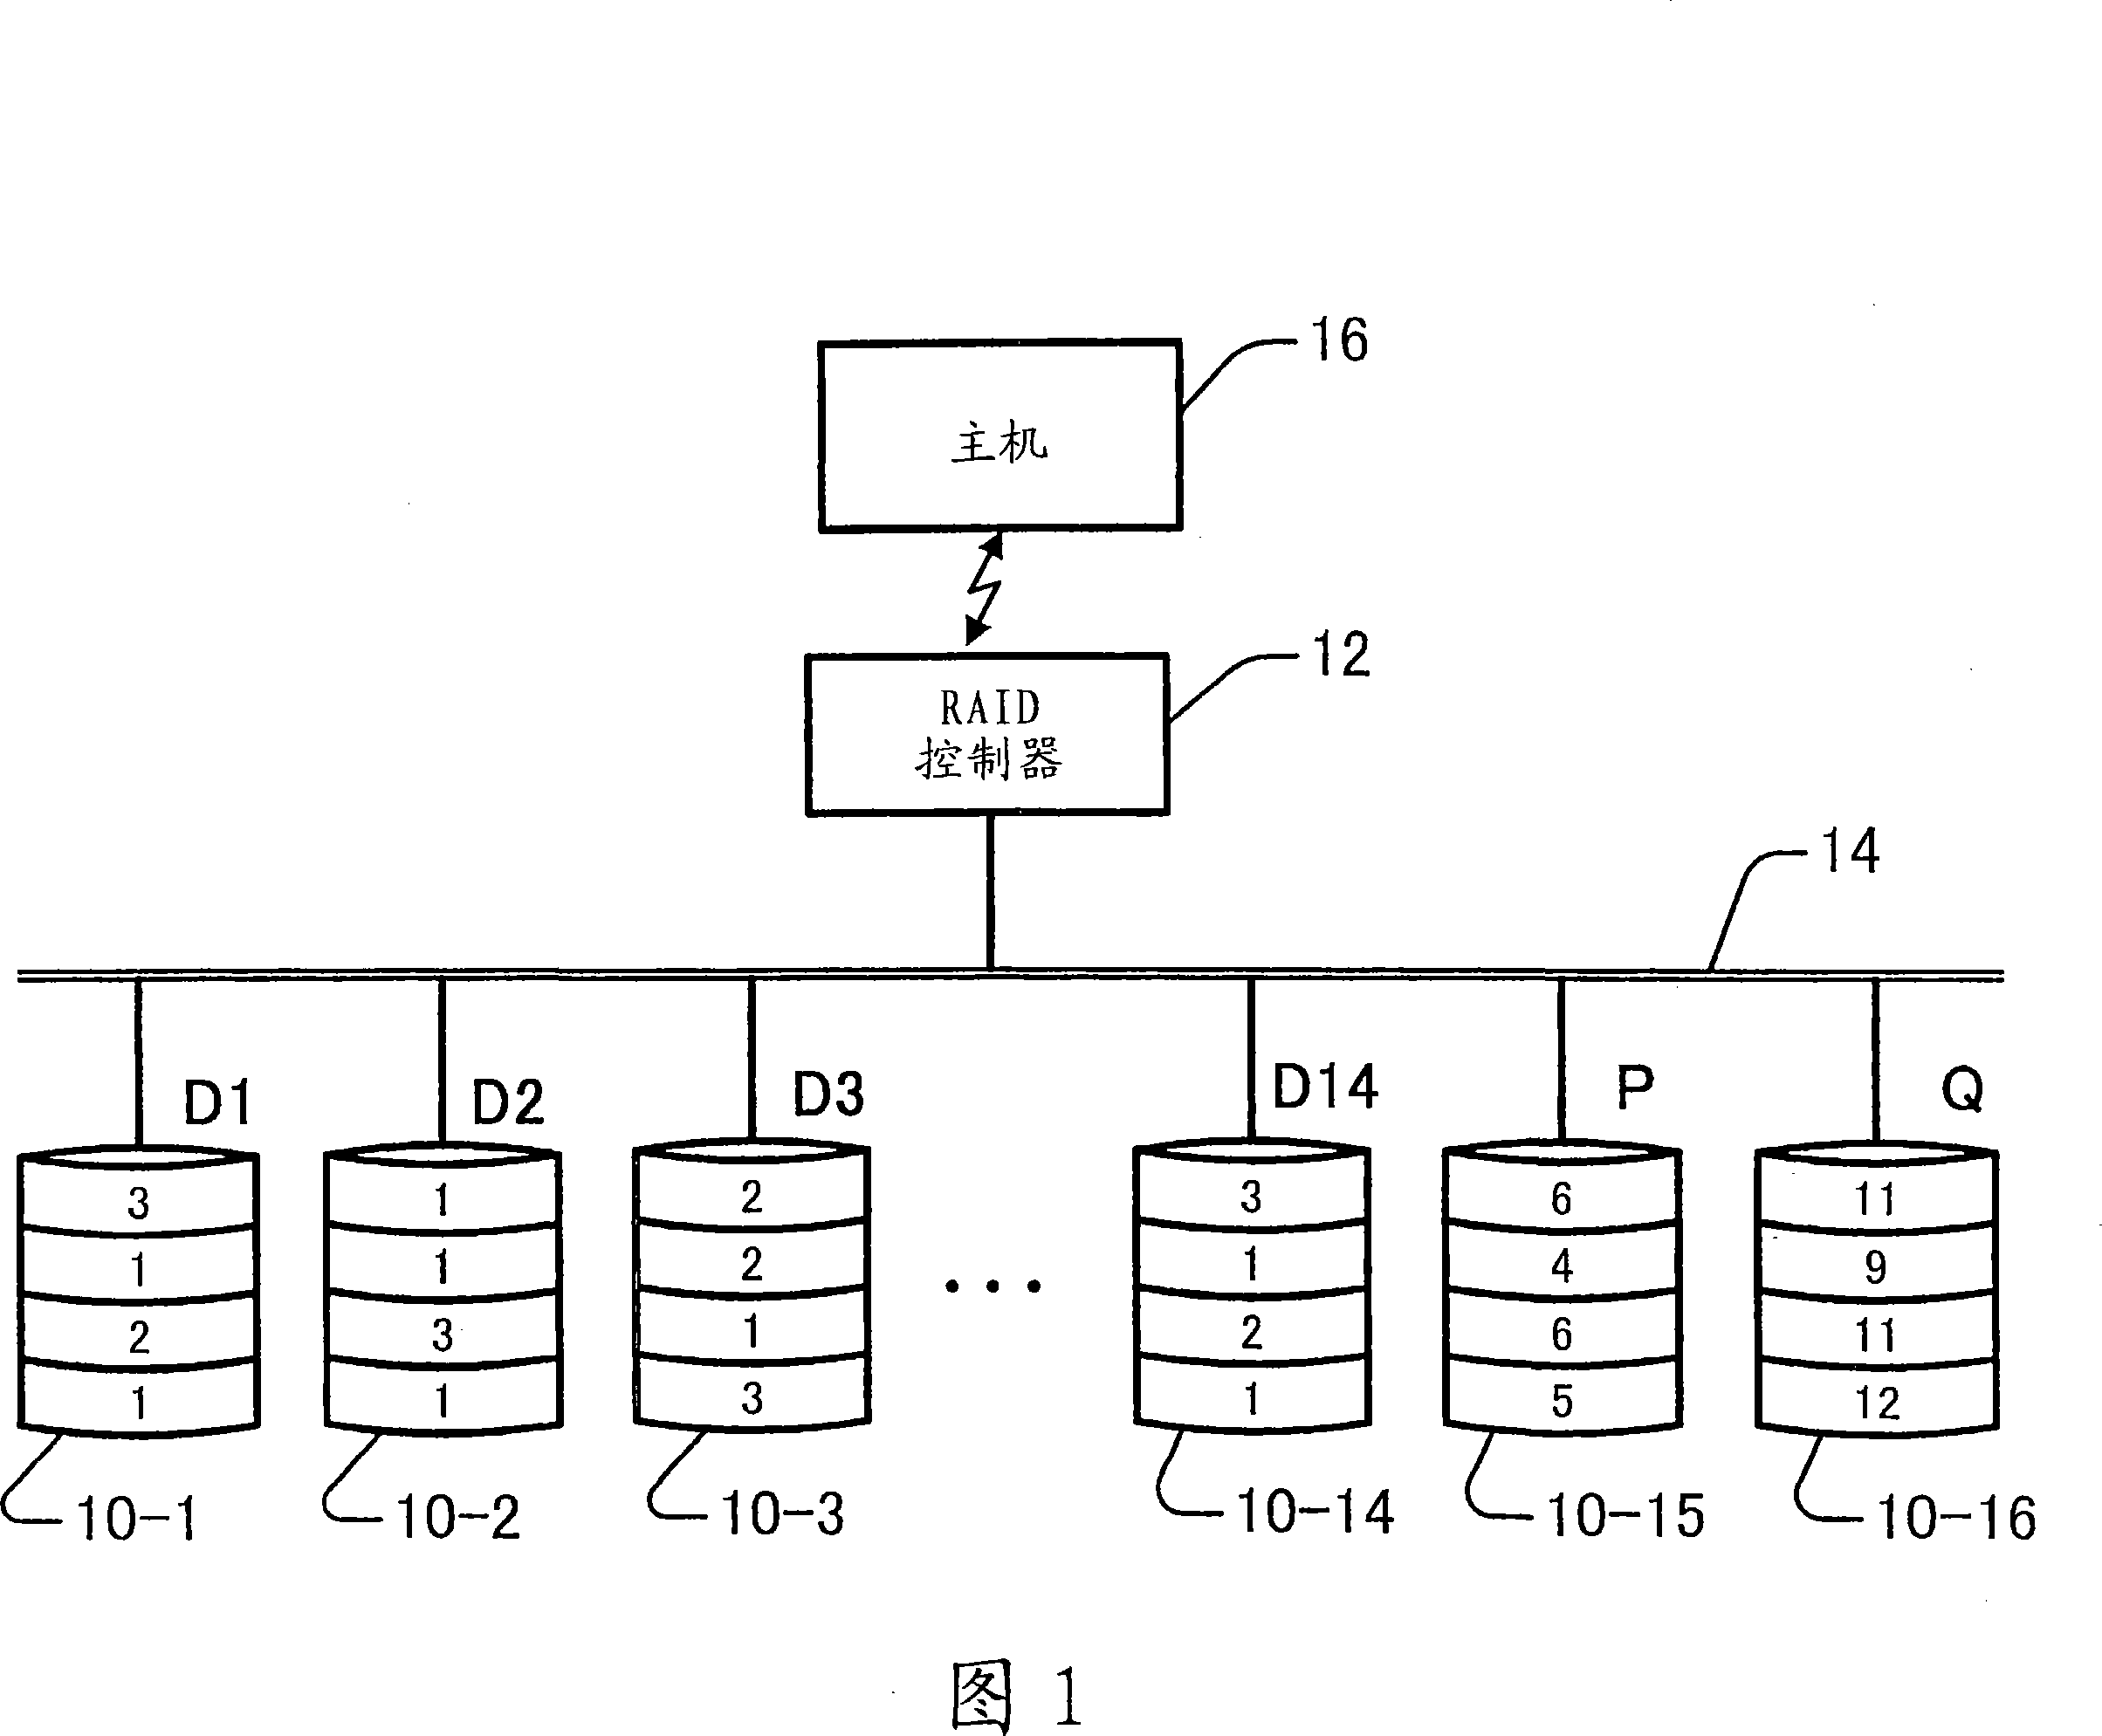 RAID system and galois field product computation method